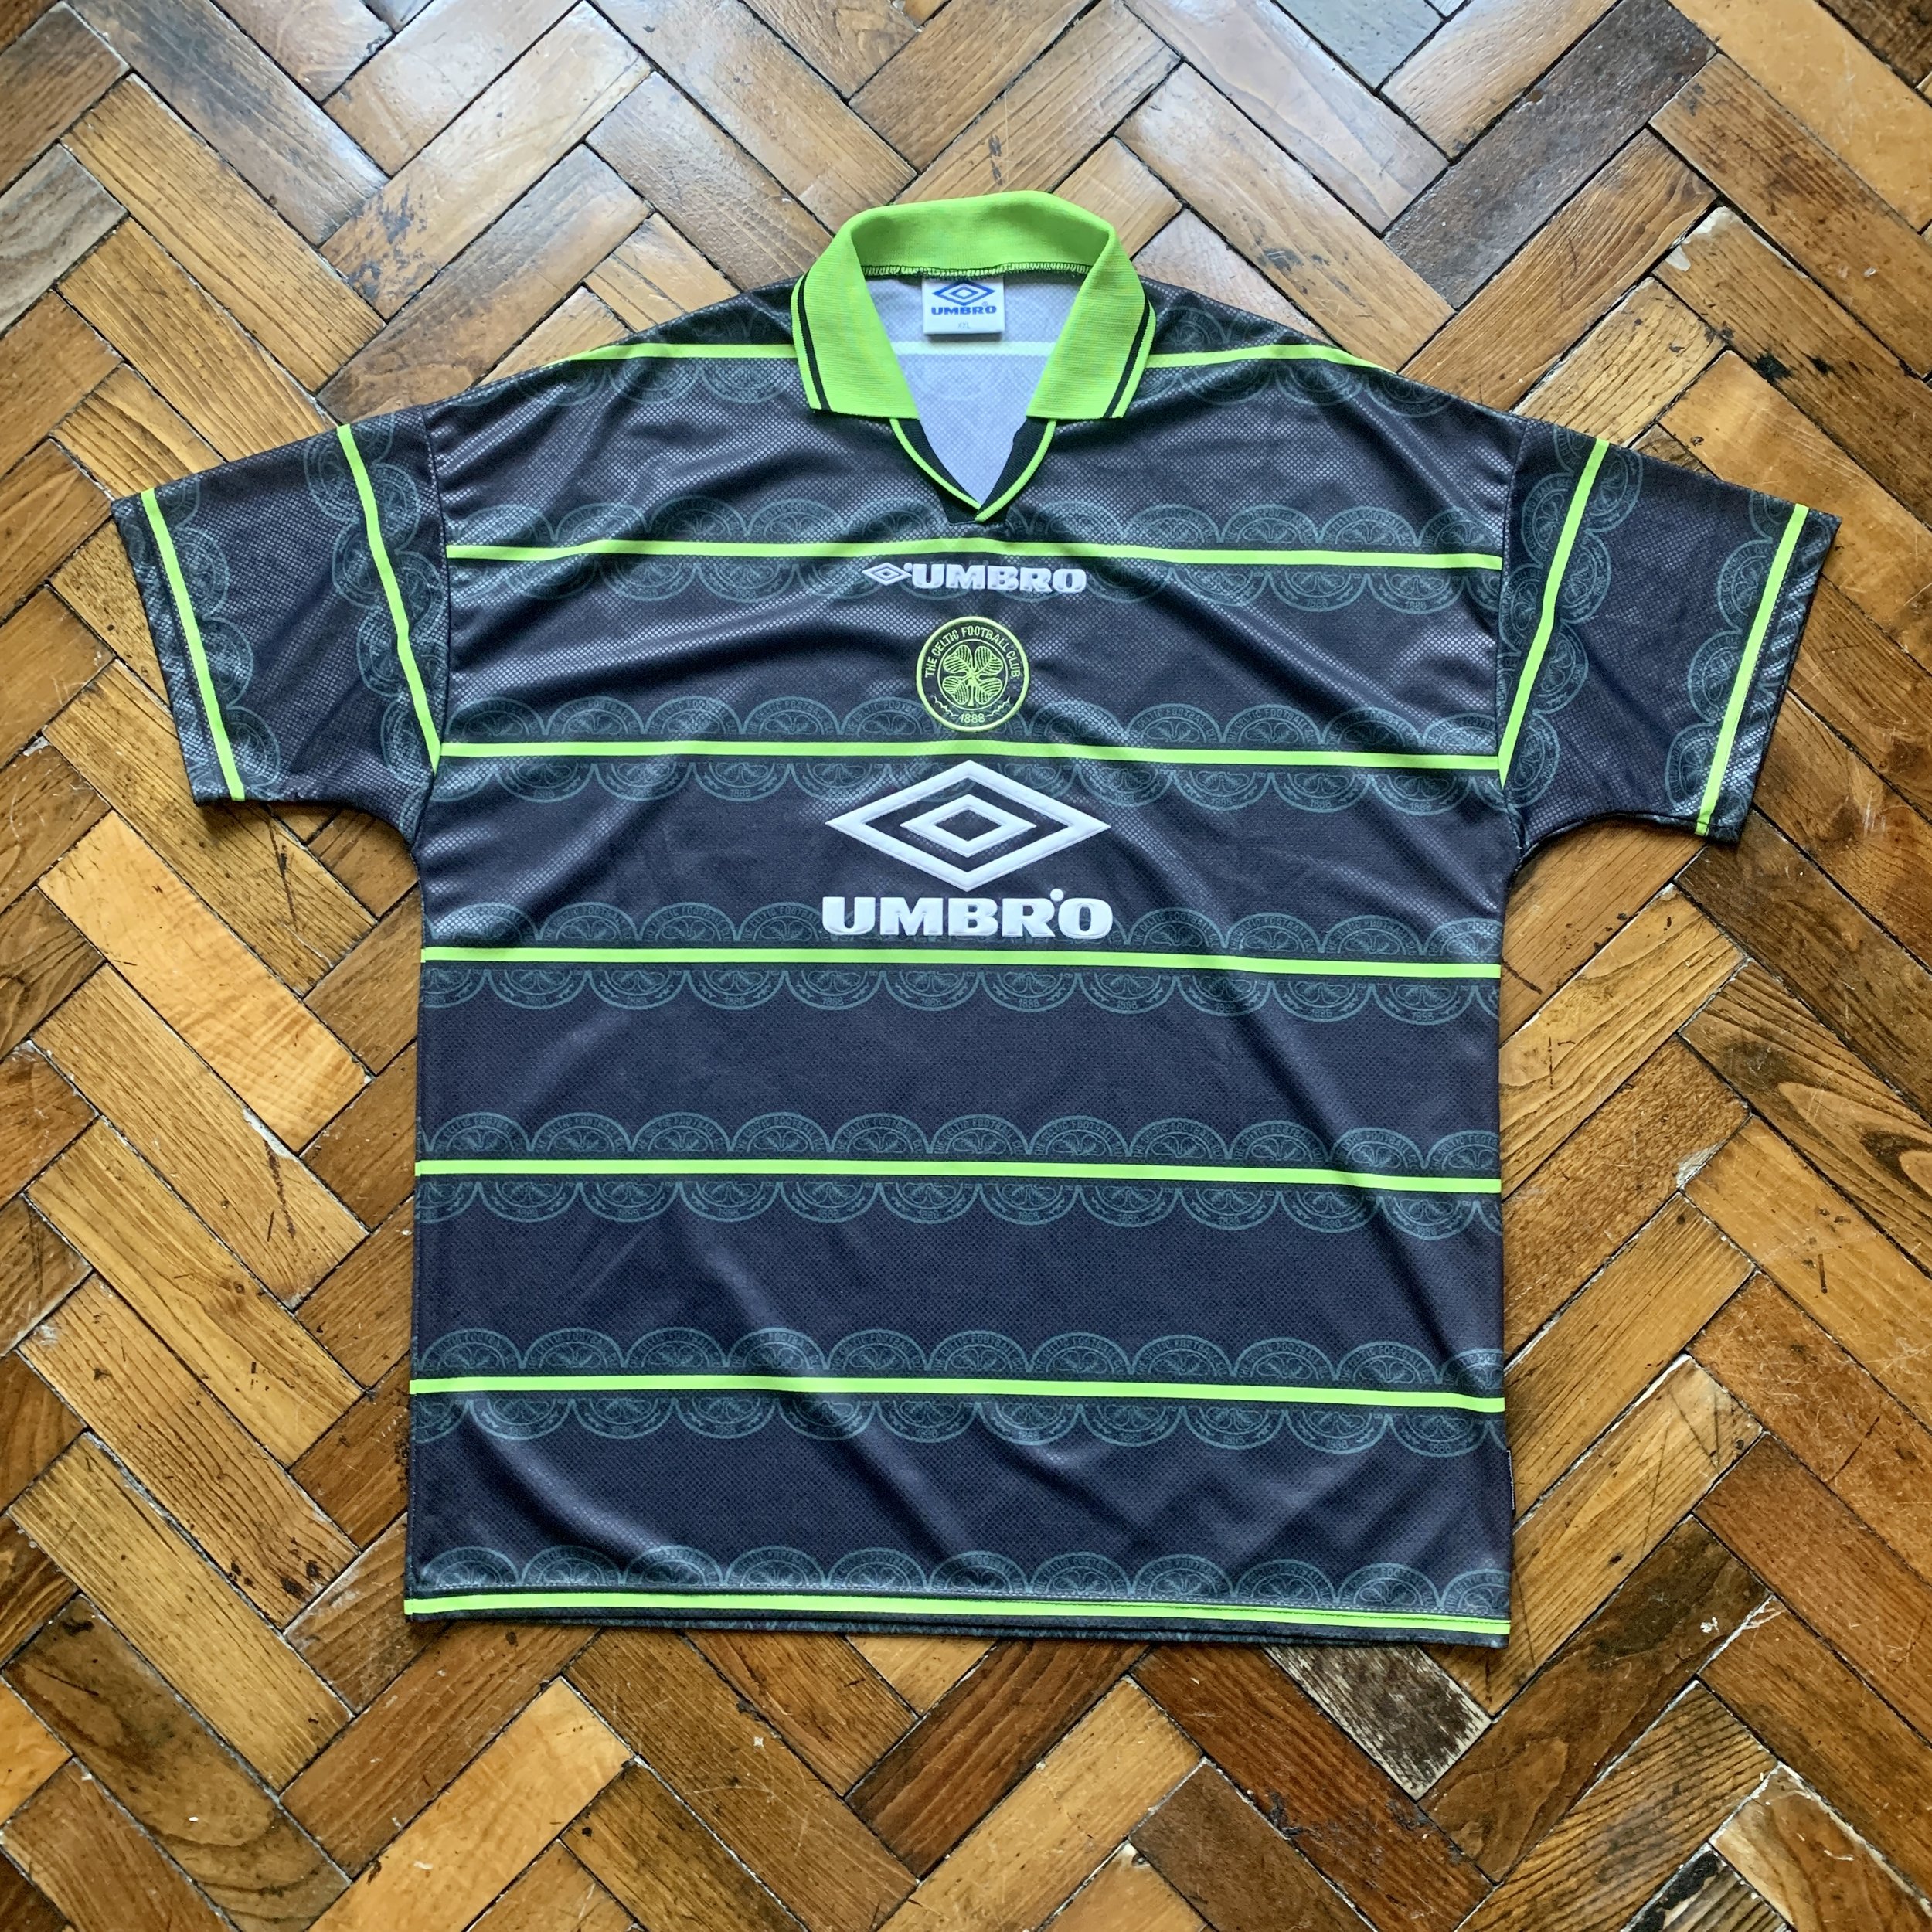 celtic kit 1999